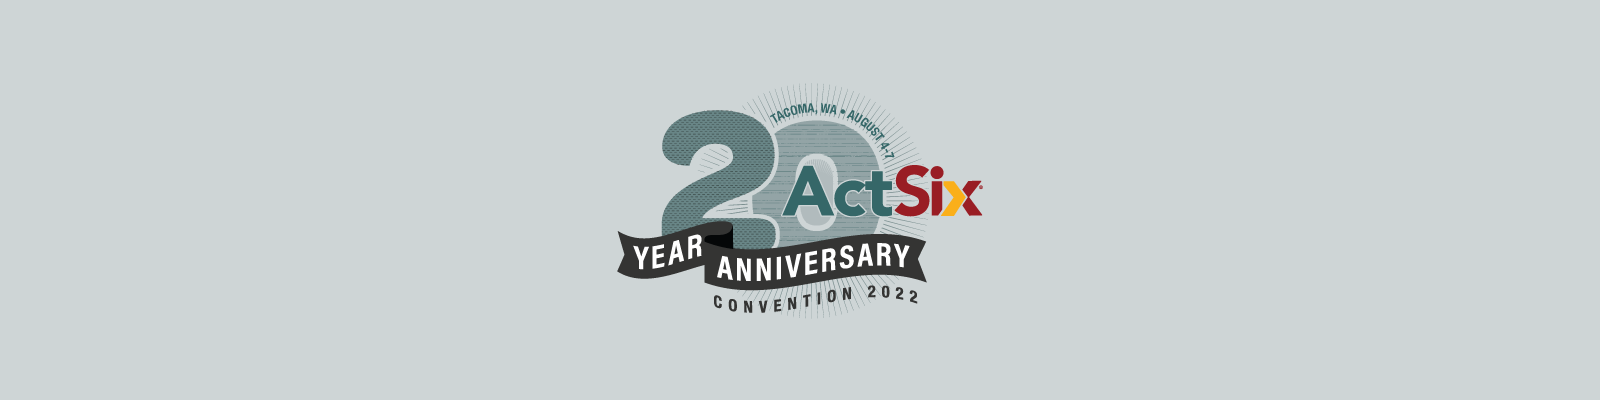 20th Anniversary Convention